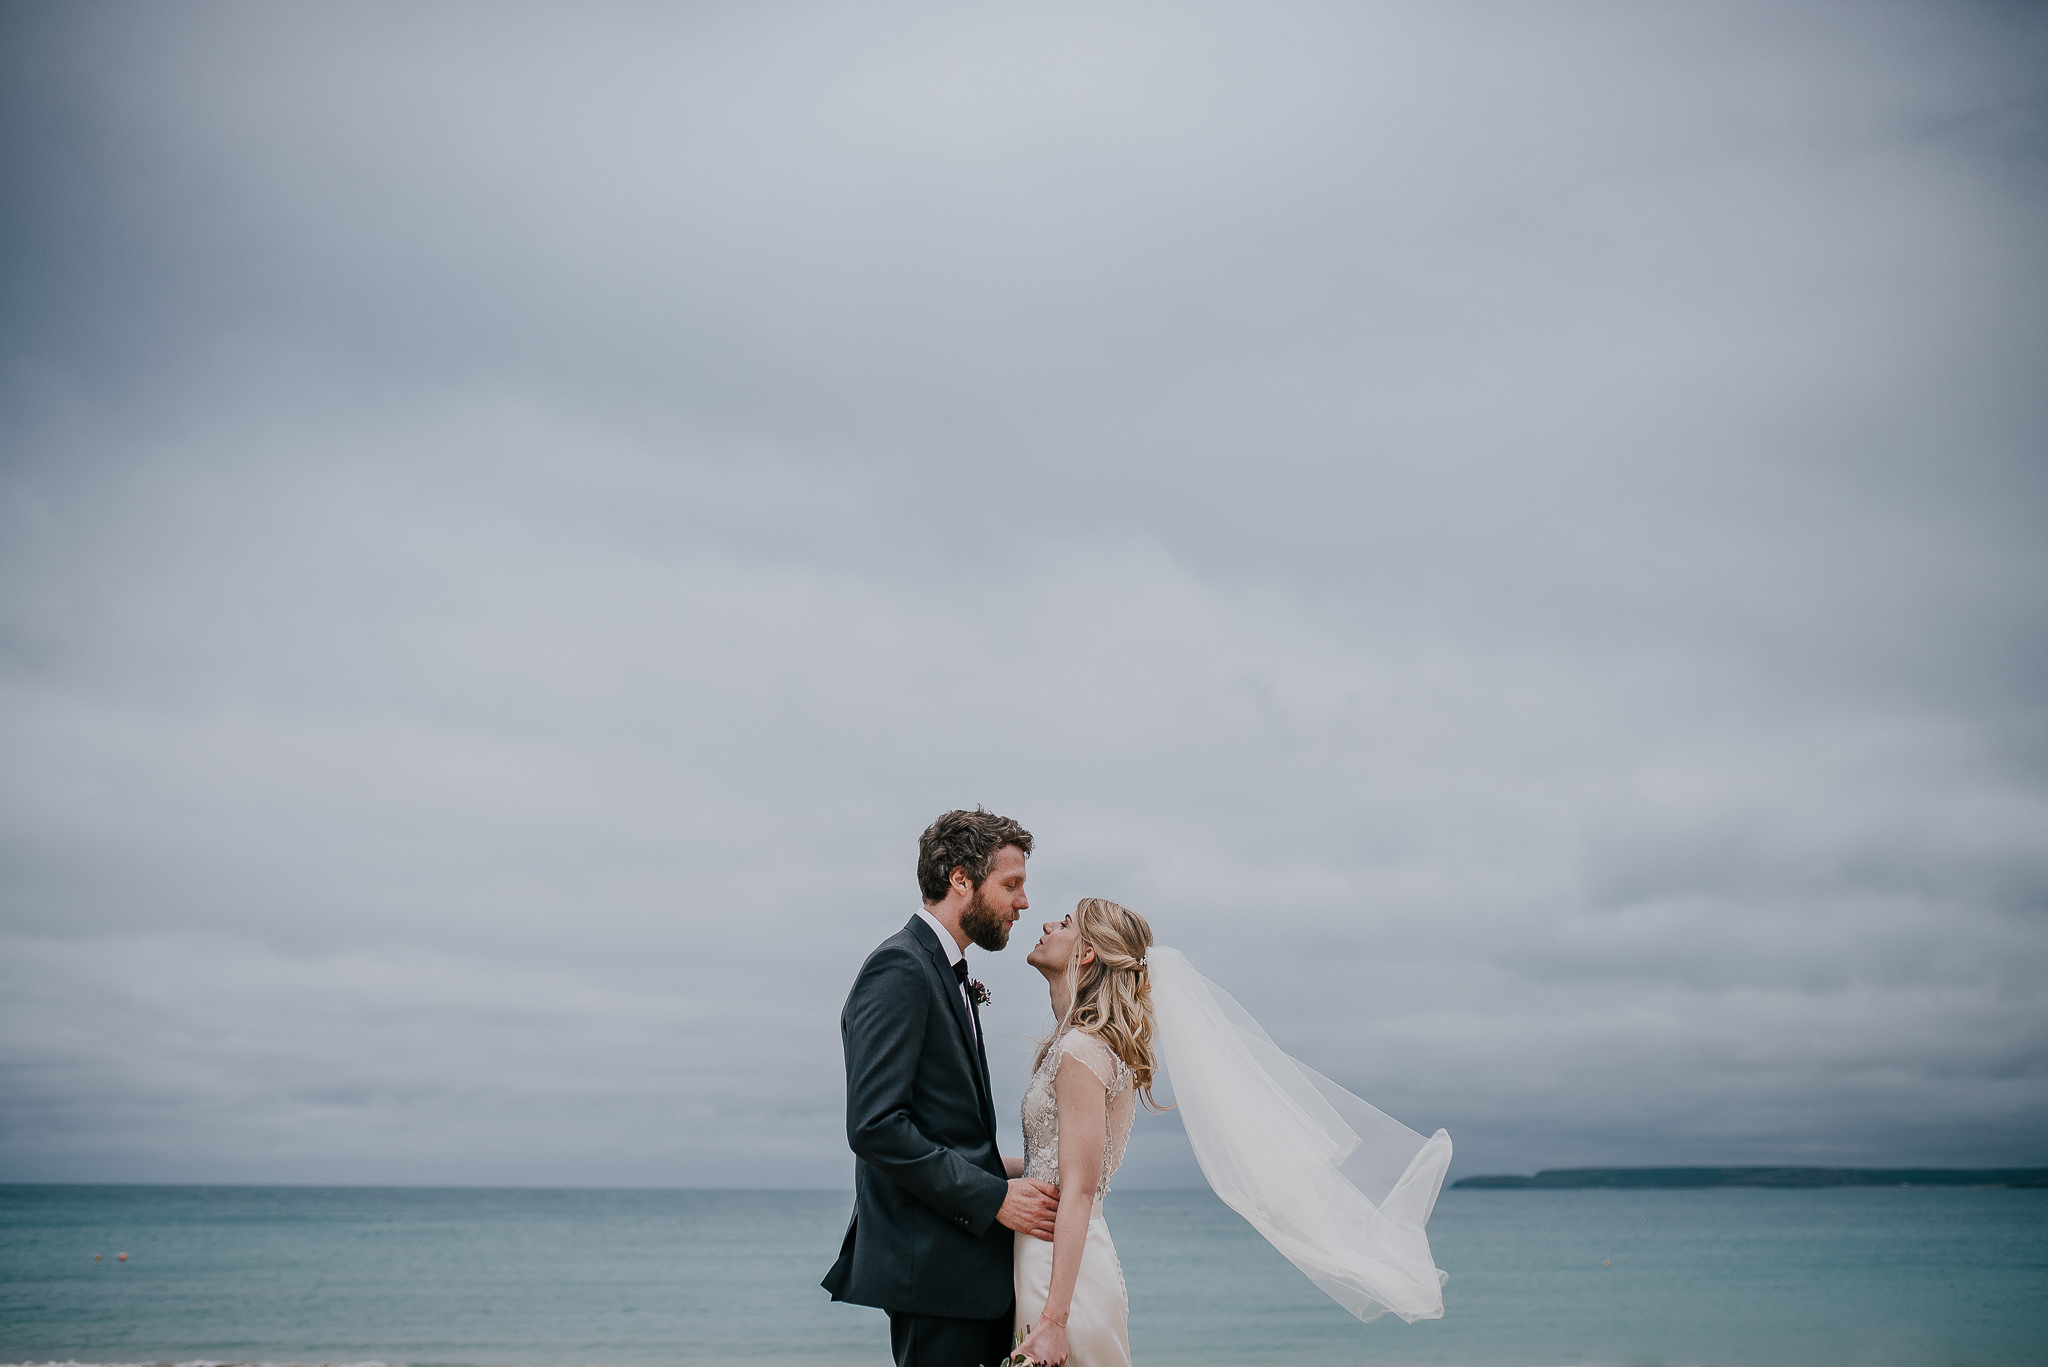 BEST-WEDDING-PHOTOGRAPHER-CORNWALL-2018-37.jpg